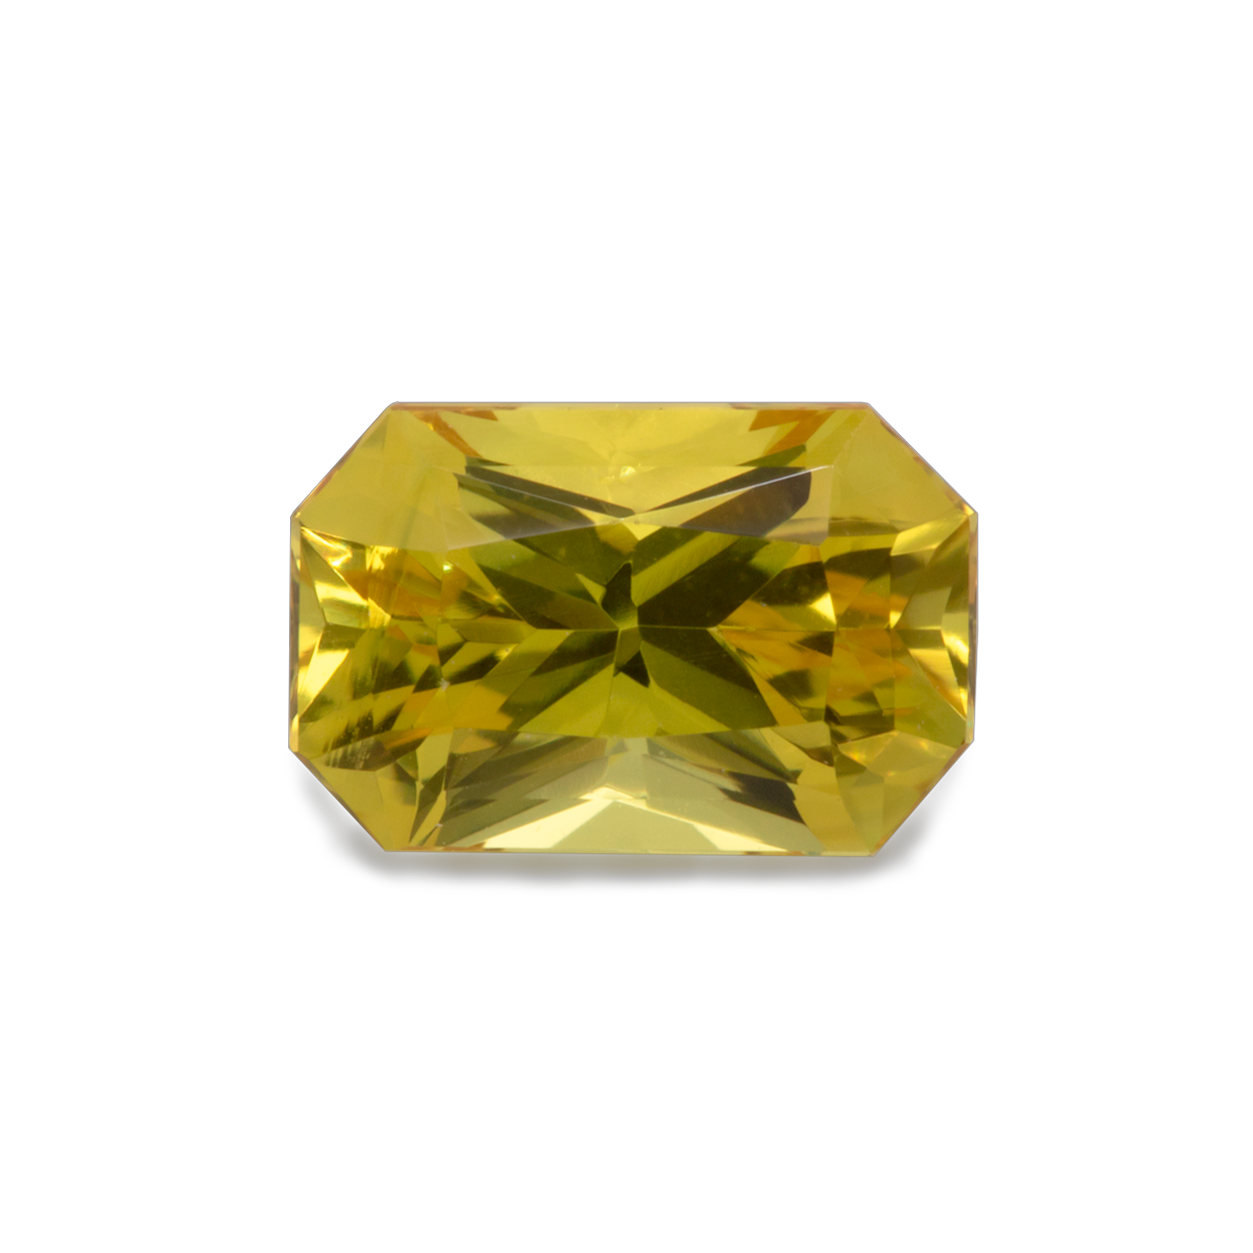 Sapphire - yellow, octagon, 6x4 mm, 0.70-0.75 cts, No. SR10004